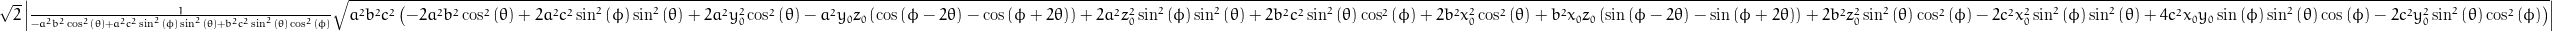 \sqrt{2} \left\lvert{\frac{1}{- a^{2} b^{2} \cos^{2}{\left (\theta \right )} + a^{2} c^{2} \sin^{2}{\left (\phi \right )} \sin^{2}{\left (\theta \right )} + b^{2} c^{2} \sin^{2}{\left (\theta \right )} \cos^{2}{\left (\phi \right )}} \sqrt{a^{2} b^{2} c^{2} \left(- 2 a^{2} b^{2} \cos^{2}{\left (\theta \right )} + 2 a^{2} c^{2} \sin^{2}{\left (\phi \right )} \sin^{2}{\left (\theta \right )} + 2 a^{2} y_{0}^{2} \cos^{2}{\left (\theta \right )} - a^{2} y_{0} z_{0} \left(\cos{\left (\phi - 2 \theta \right )} - \cos{\left (\phi + 2 \theta \right )}\right) + 2 a^{2} z_{0}^{2} \sin^{2}{\left (\phi \right )} \sin^{2}{\left (\theta \right )} + 2 b^{2} c^{2} \sin^{2}{\left (\theta \right )} \cos^{2}{\left (\phi \right )} + 2 b^{2} x_{0}^{2} \cos^{2}{\left (\theta \right )} + b^{2} x_{0} z_{0} \left(\sin{\left (\phi - 2 \theta \right )} - \sin{\left (\phi + 2 \theta \right )}\right) + 2 b^{2} z_{0}^{2} \sin^{2}{\left (\theta \right )} \cos^{2}{\left (\phi \right )} - 2 c^{2} x_{0}^{2} \sin^{2}{\left (\phi \right )} \sin^{2}{\left (\theta \right )} + 4 c^{2} x_{0} y_{0} \sin{\left (\phi \right )} \sin^{2}{\left (\theta \right )} \cos{\left (\phi \right )} - 2 c^{2} y_{0}^{2} \sin^{2}{\left (\theta \right )} \cos^{2}{\left (\phi \right )}\right)}}\right\rvert